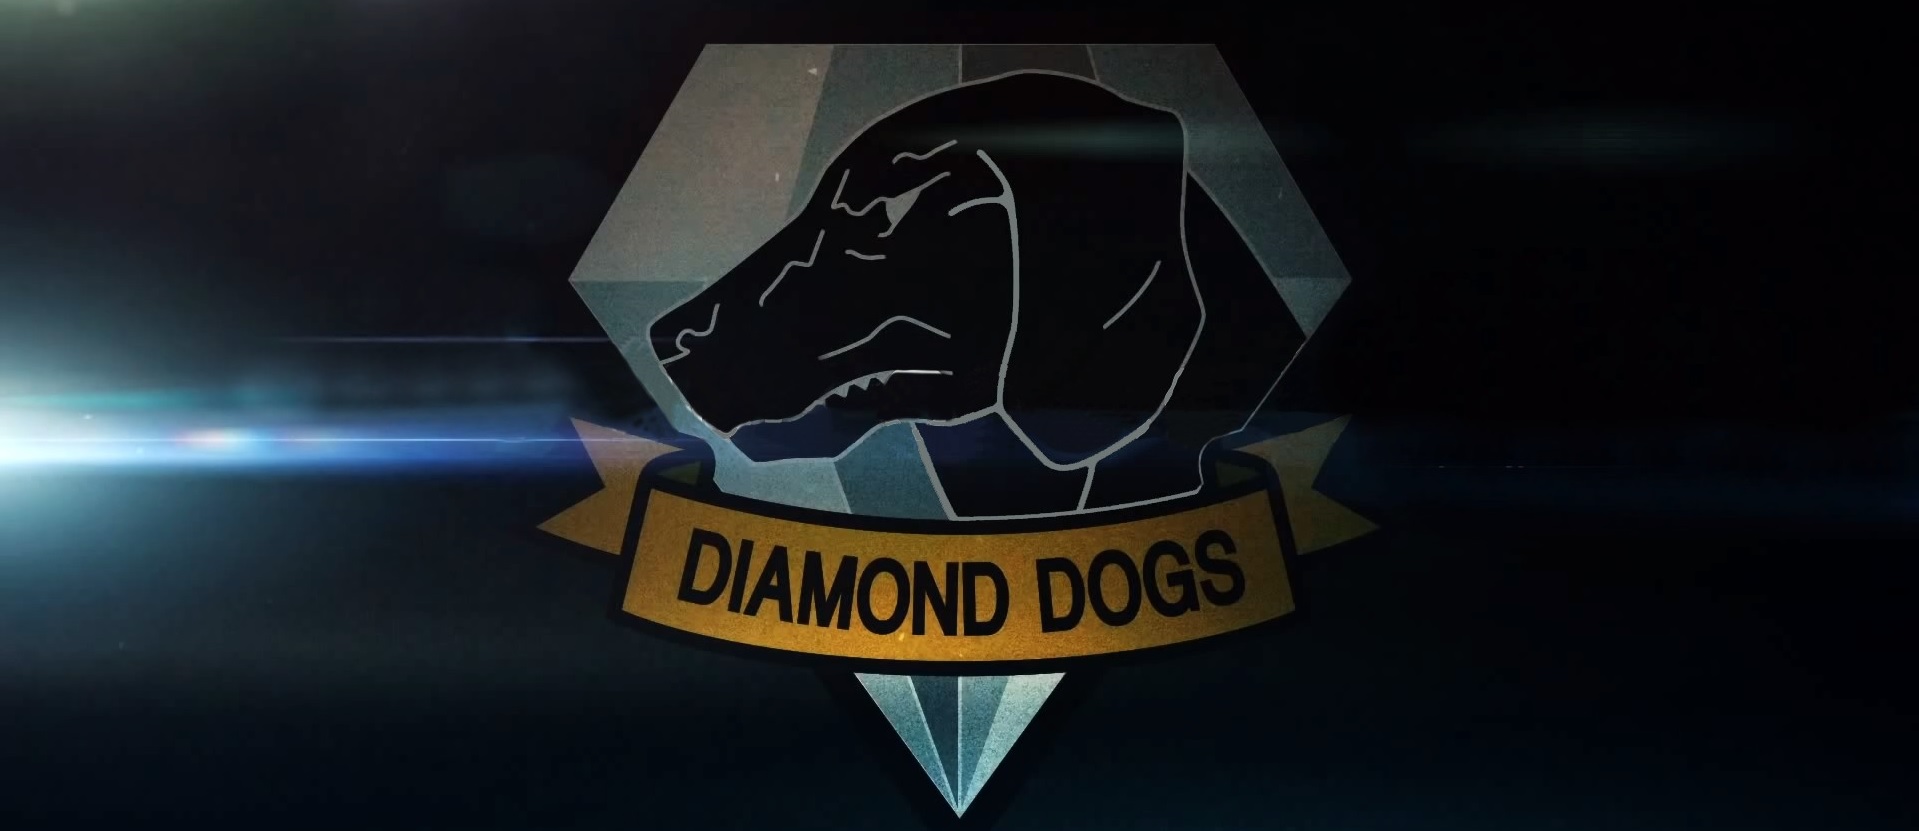 MGS 5 The Phantom Pain Diamond Dogs alle Infos zur